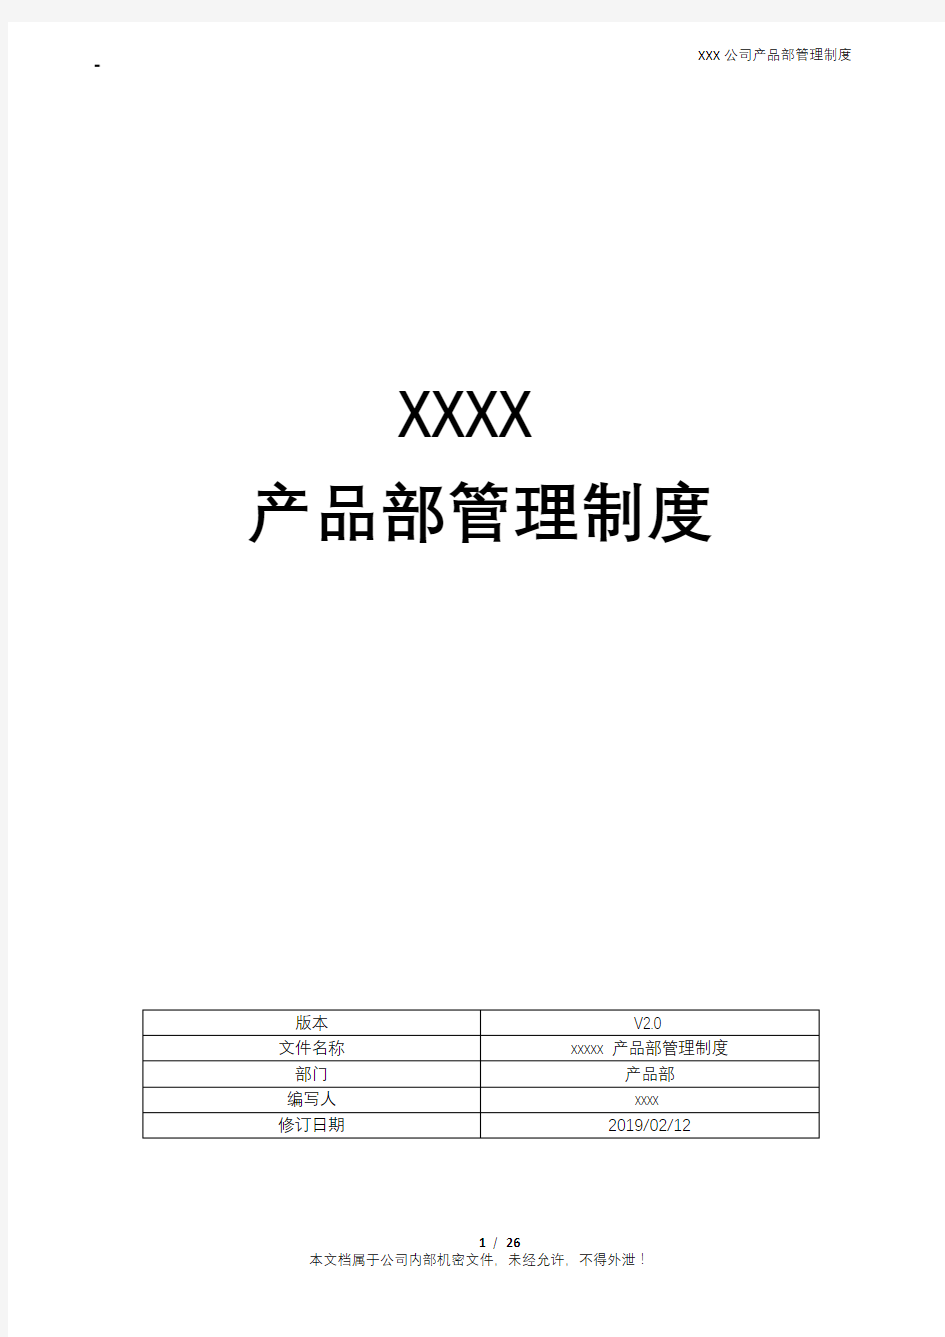 XXXX互联网公司产品部管理制度(含产品开发流程及规范模板)